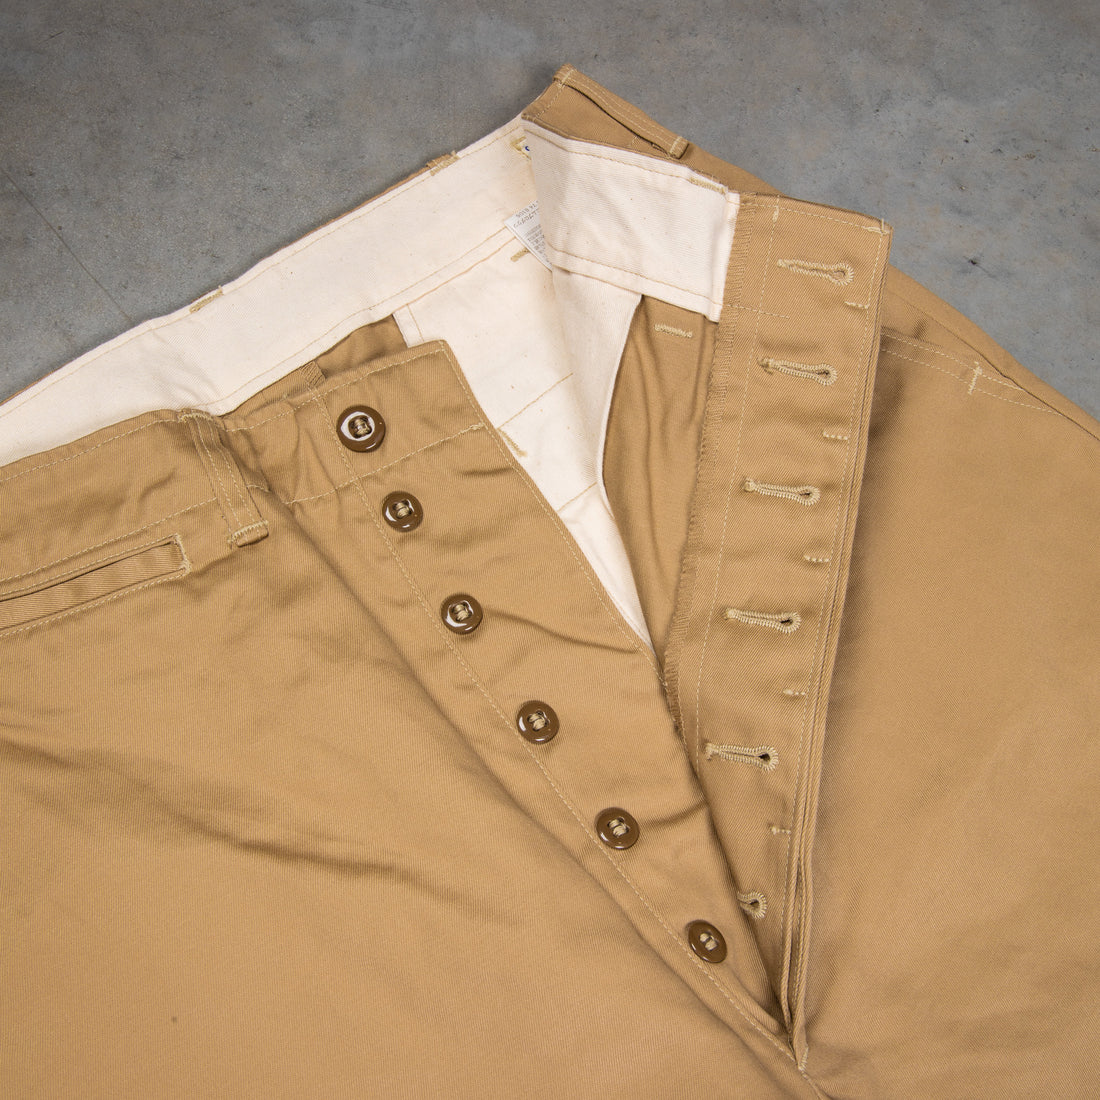 Orslow Vintage Fit Army trousers Khaki